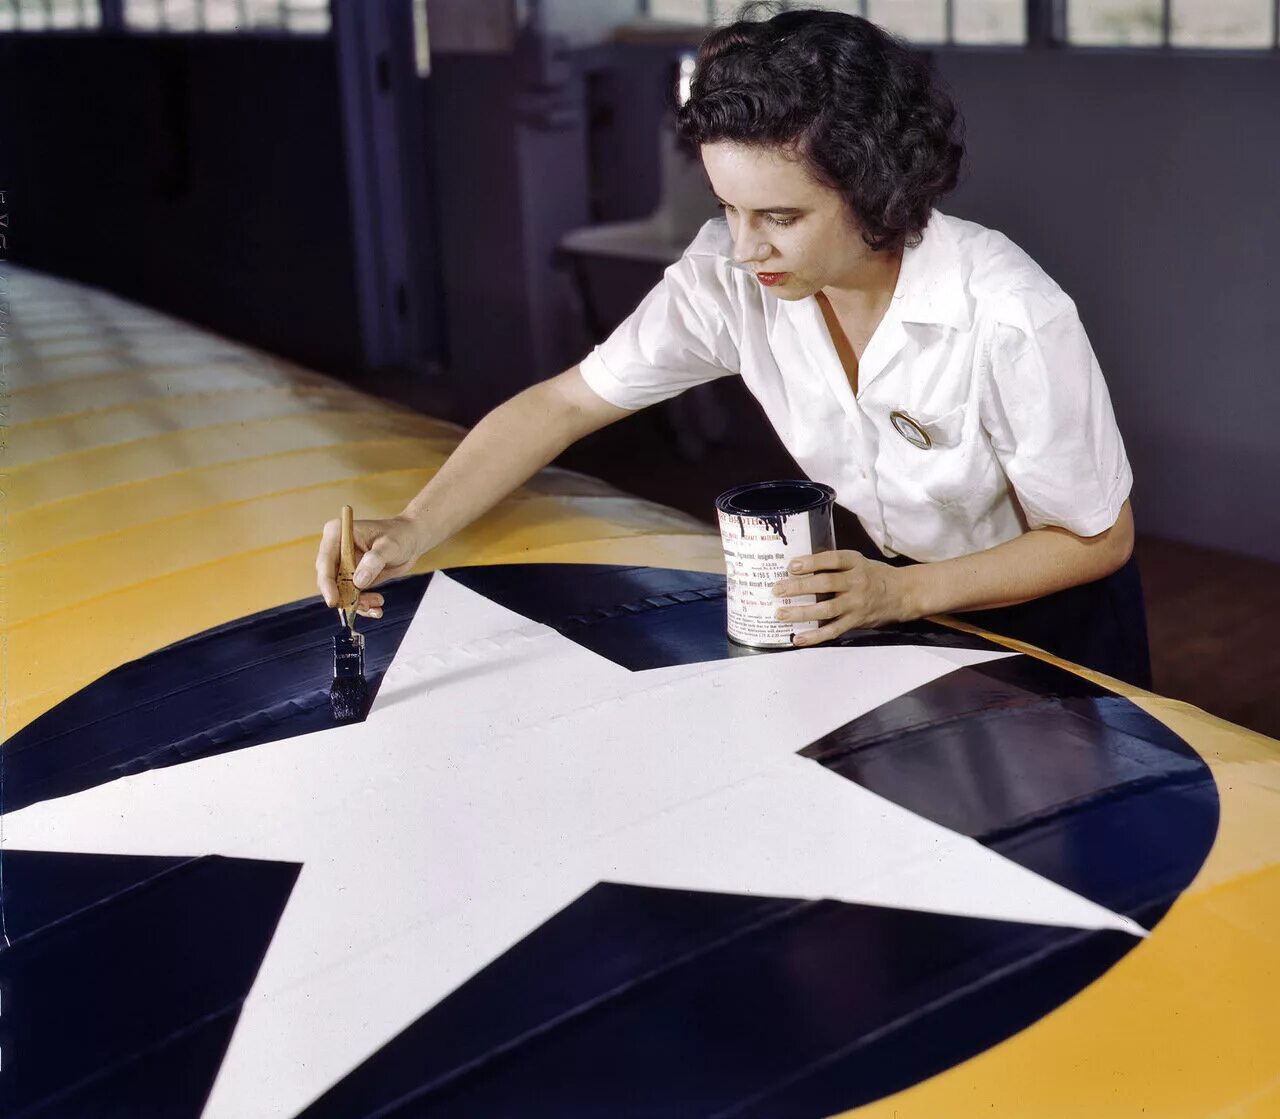 40е Америка. Фотограф Америка 40-е. Civil servant work. Vehicle women 1940s.